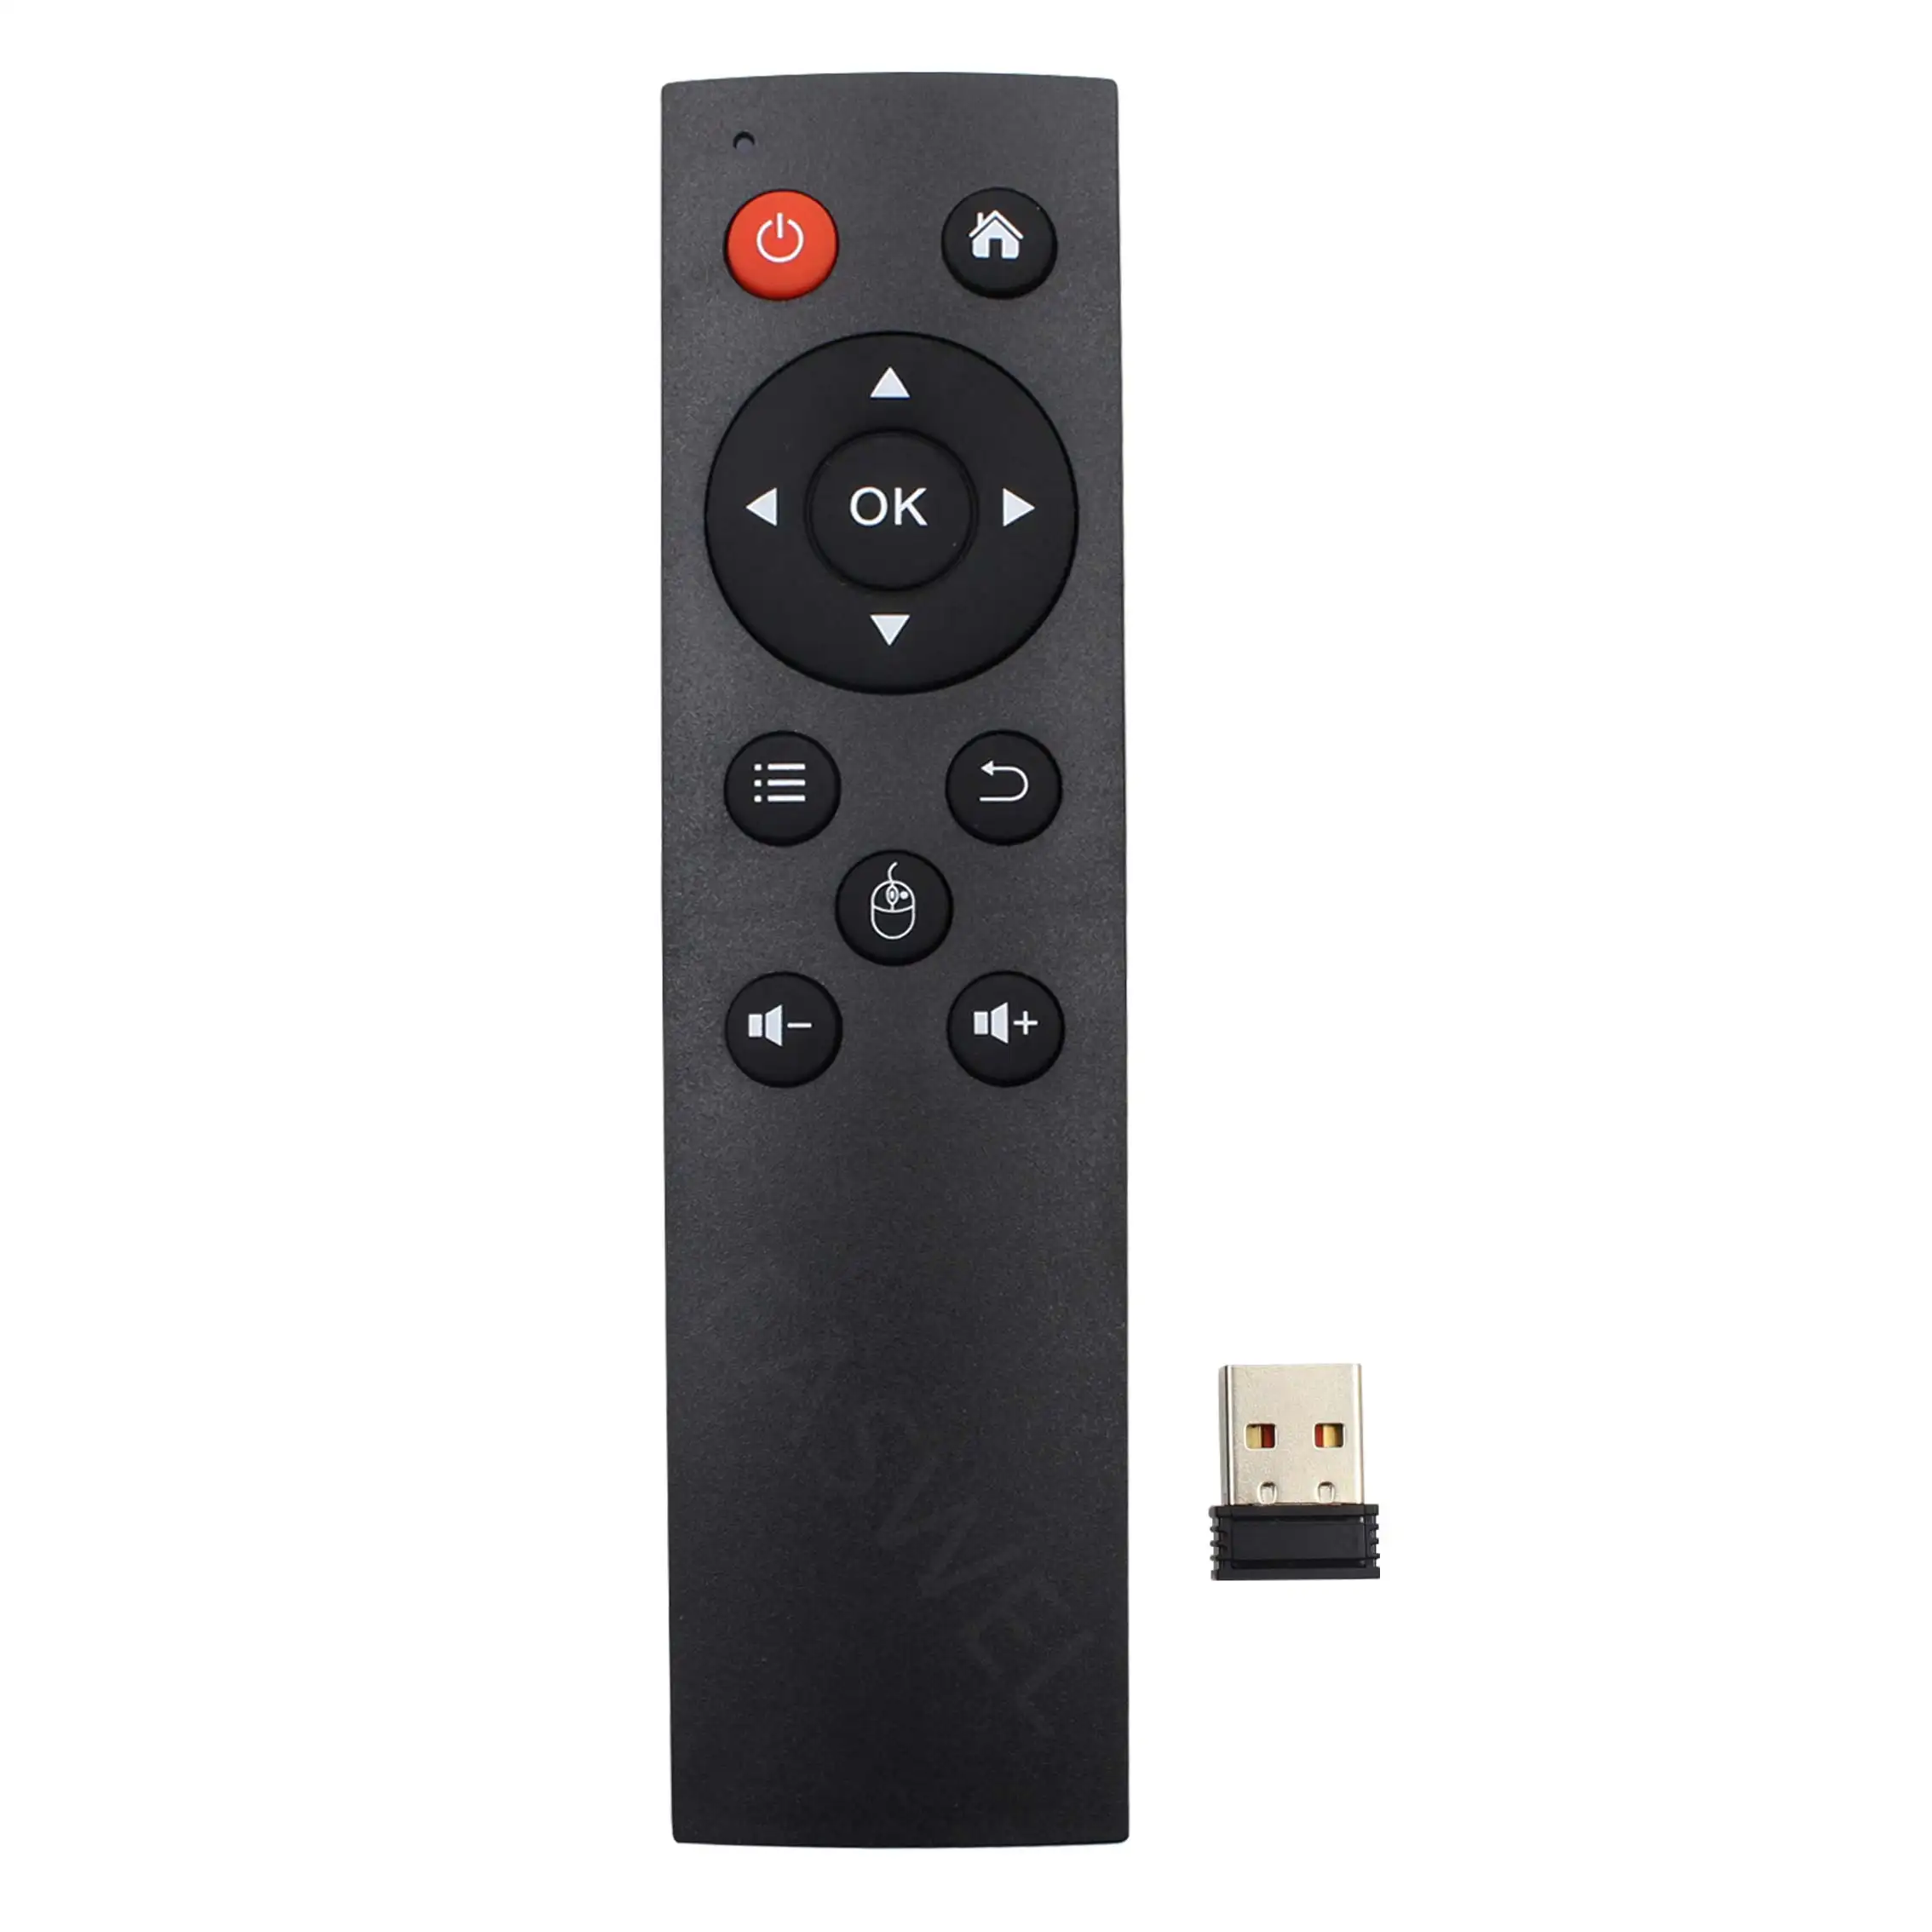 Remote Kontrol Keyboard Mouse Udara Nirkabel 2.4G, Remote Kontrol untuk PC TV Android TV Box